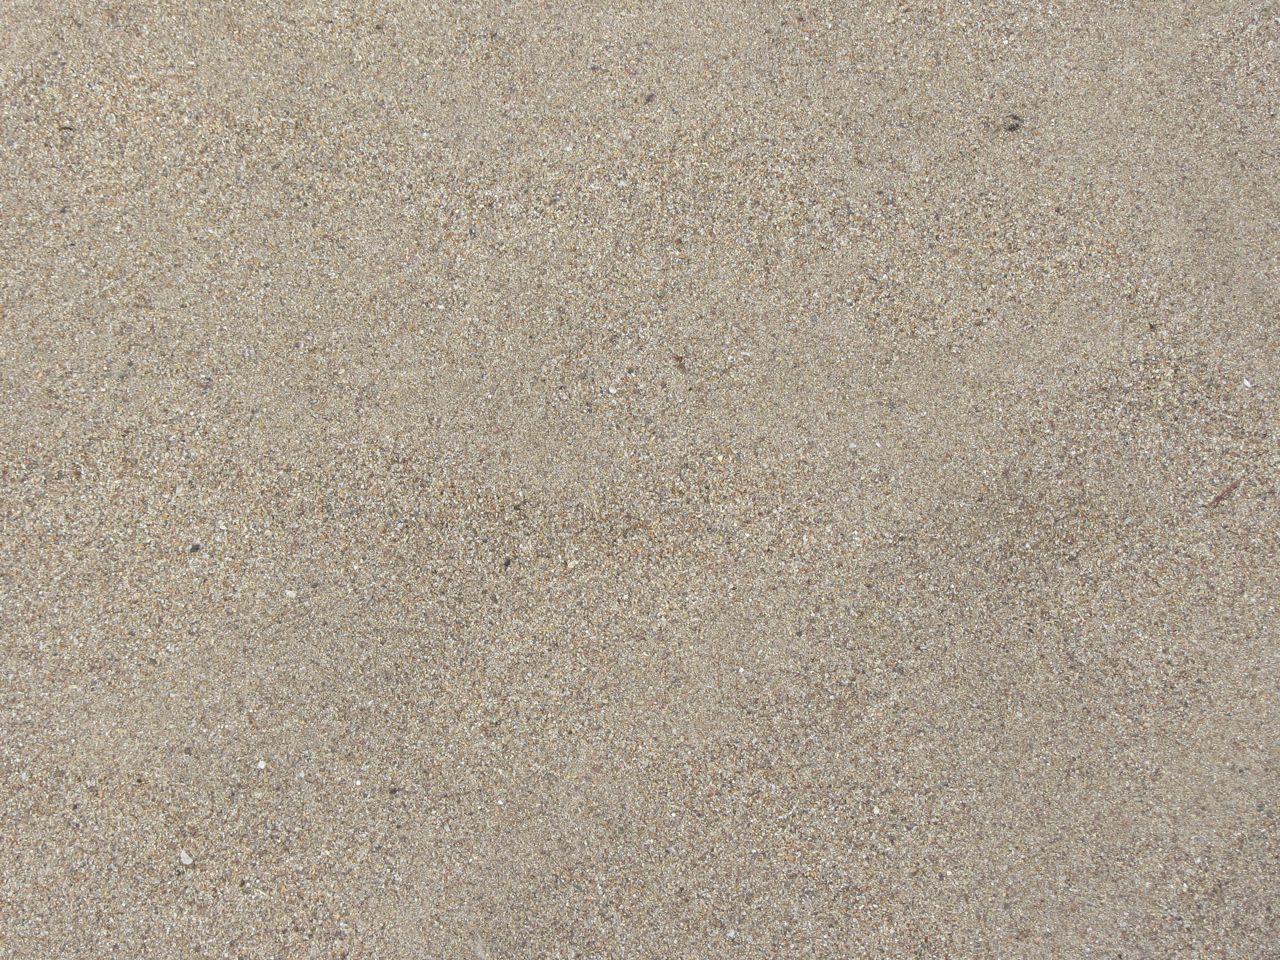 Recent floods left a fresh coverage of fine granitic sand.